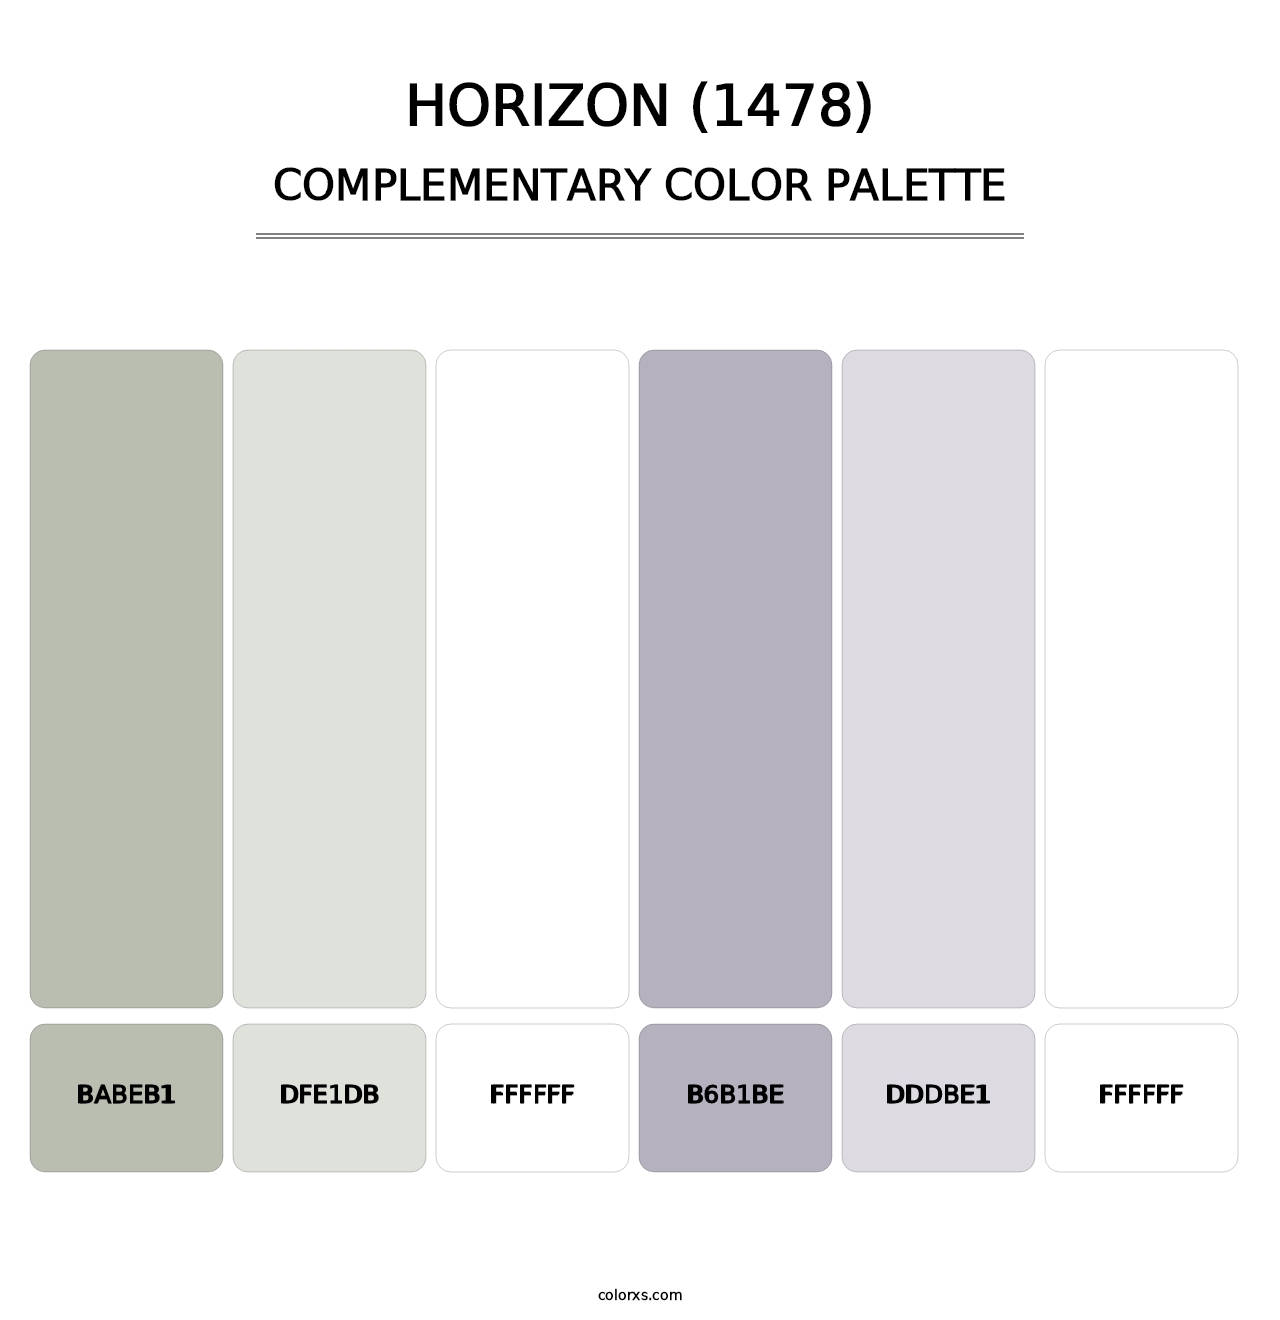 Horizon (1478) - Complementary Color Palette